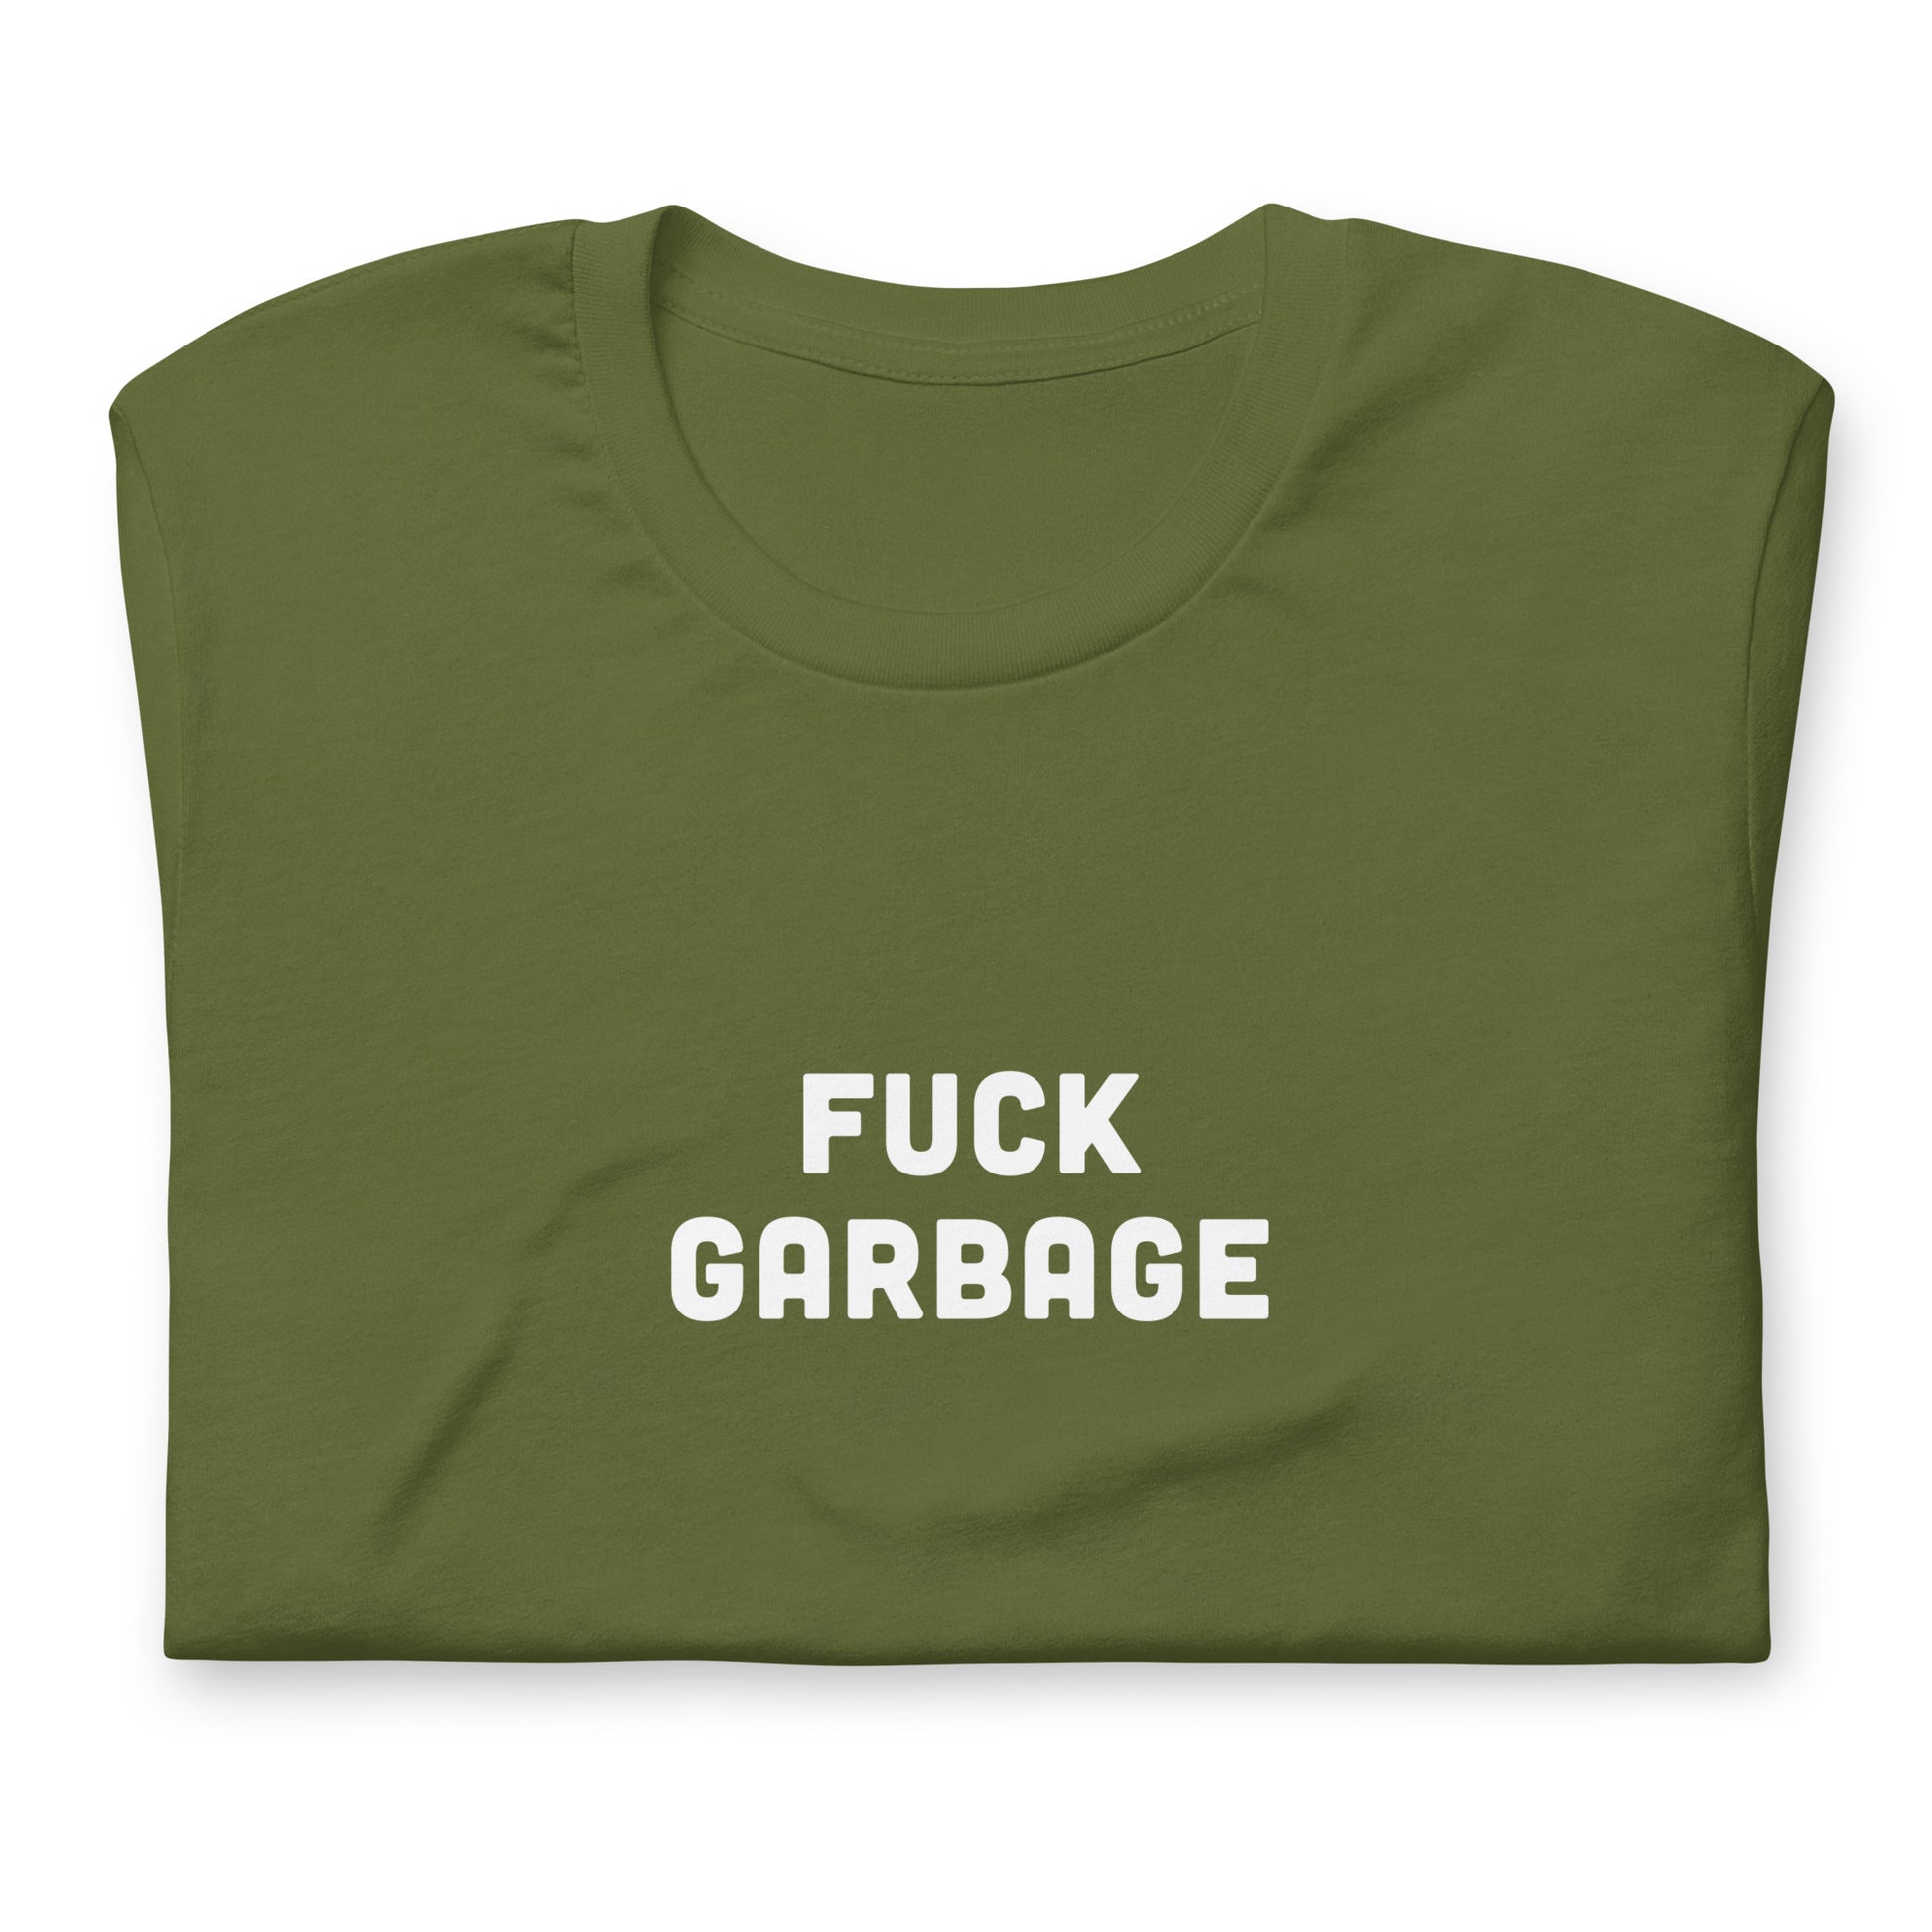 Fuck Garbage T-Shirt Size 2XL Color Black